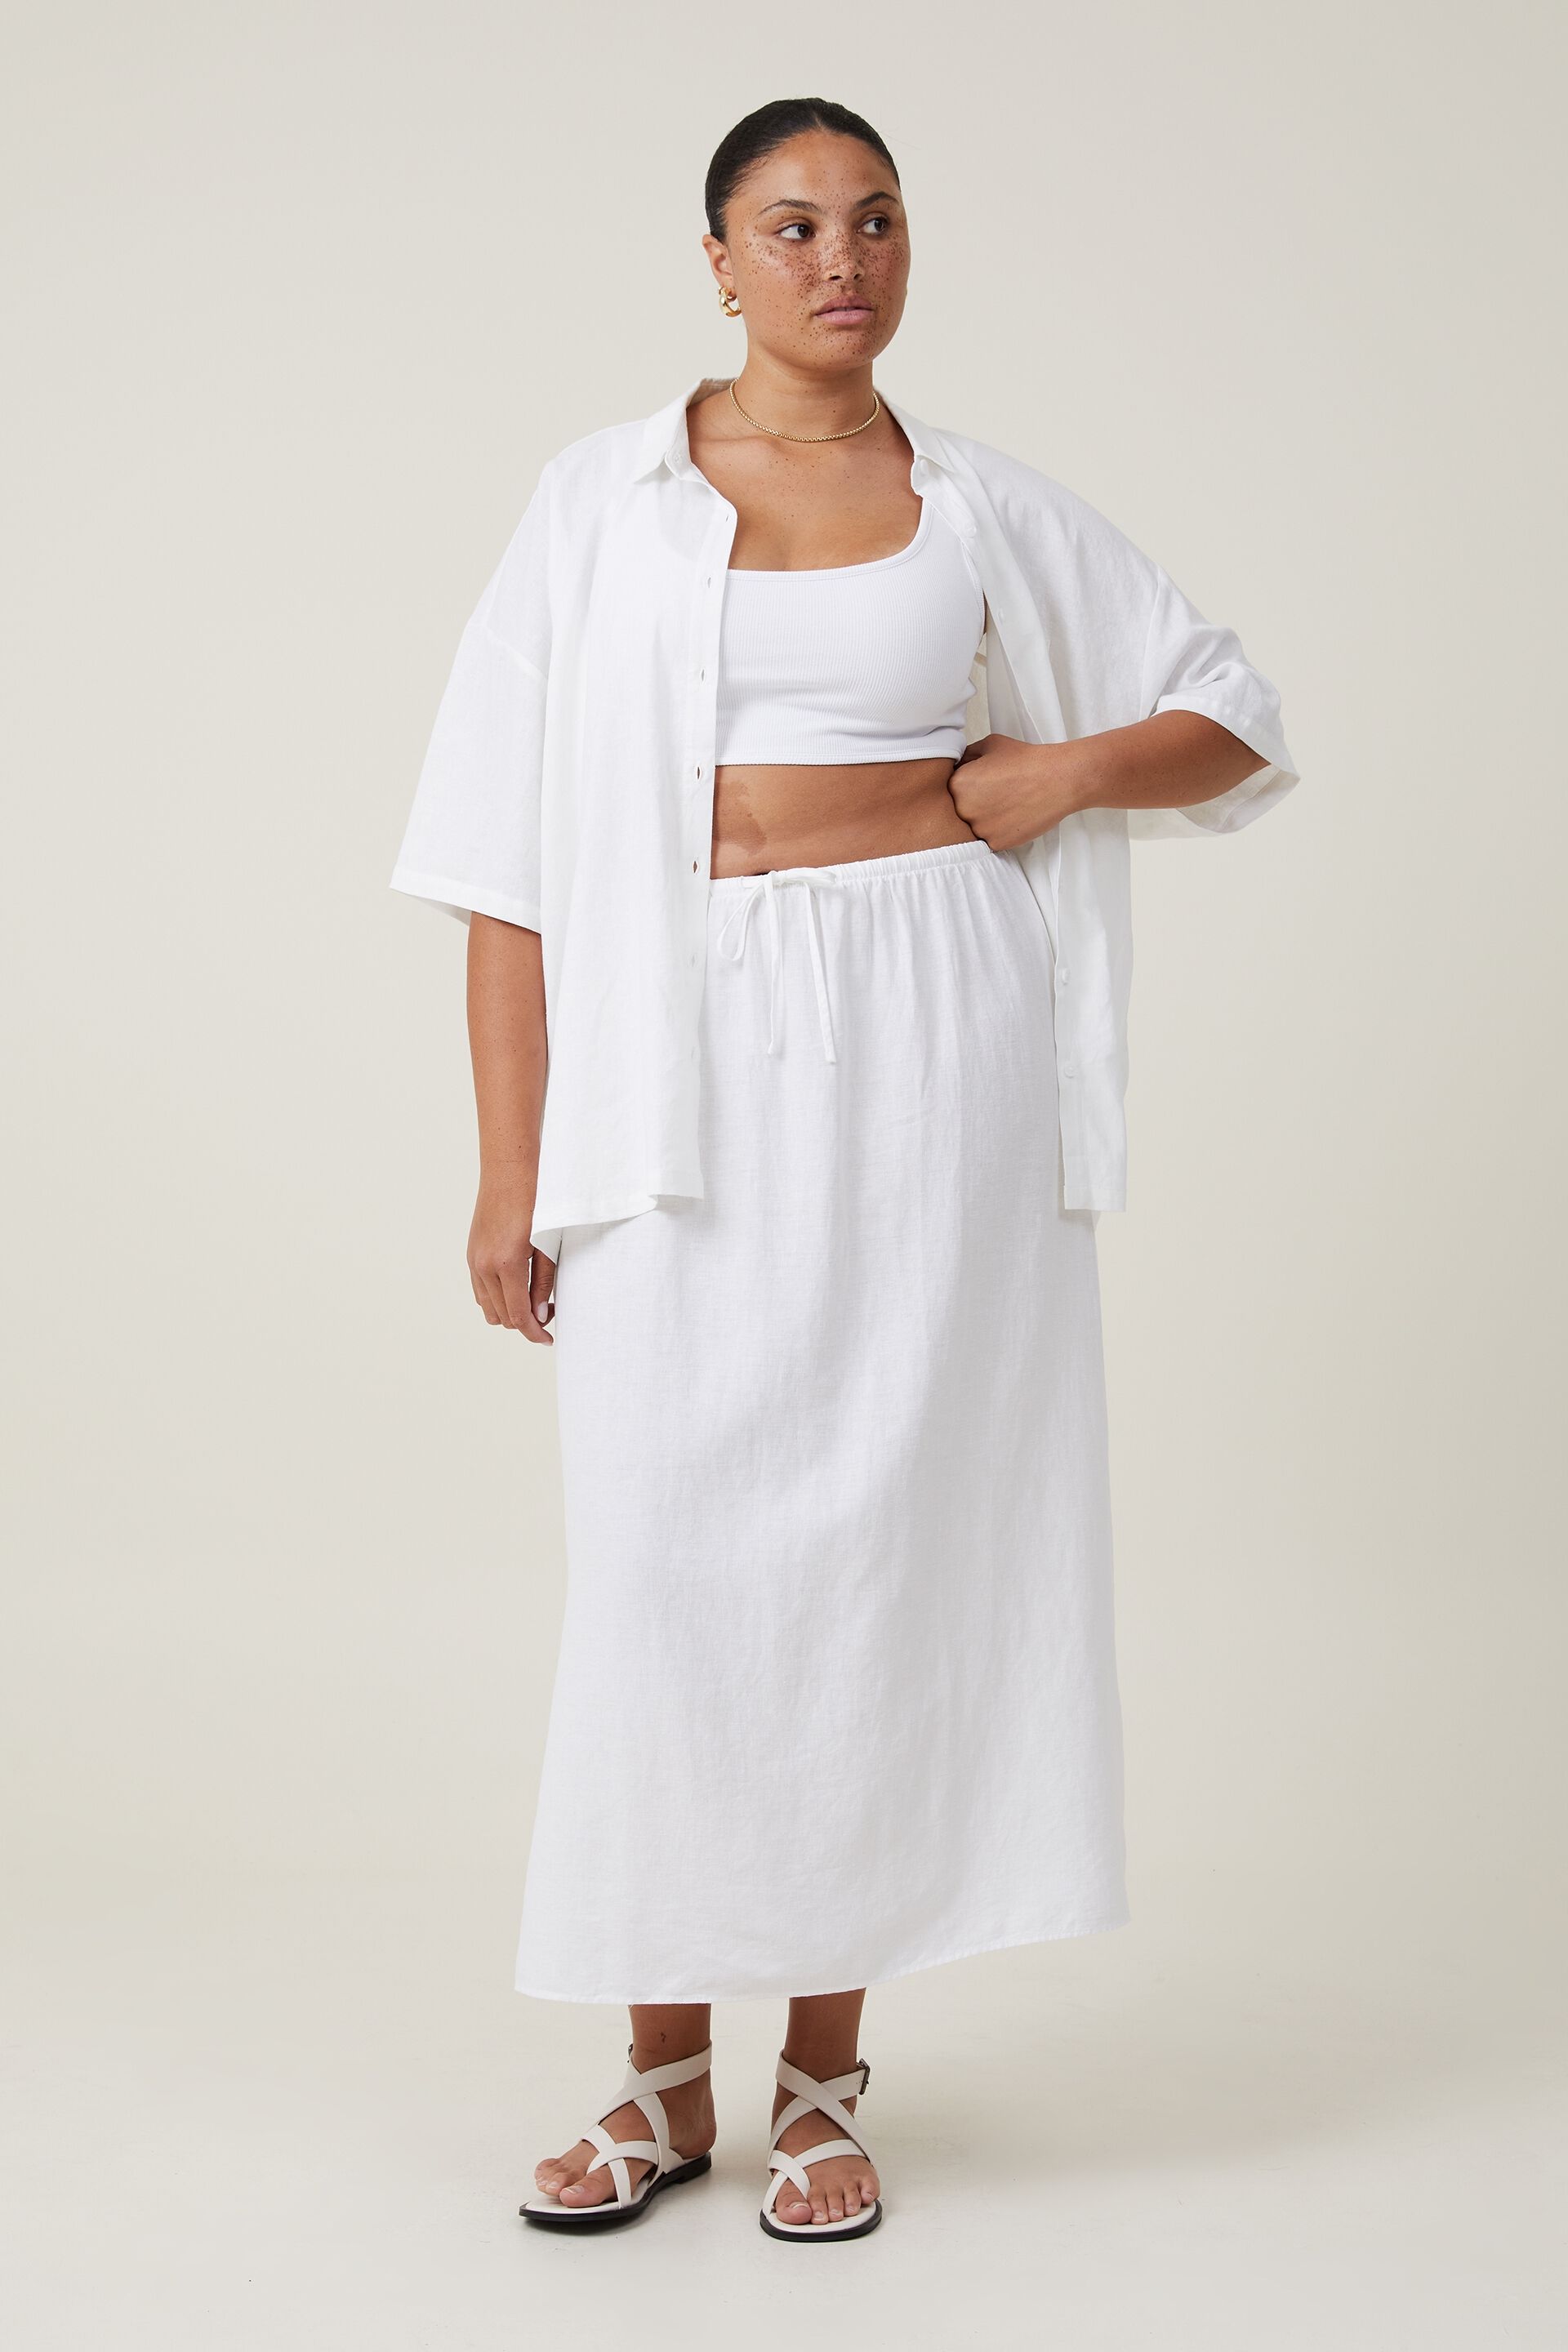 White Ivory Satin Skirt Midi Slip Skirt TWO Layers 100 Real  Etsy  Satin  slip dress outfit Fashion Slip dress outfit